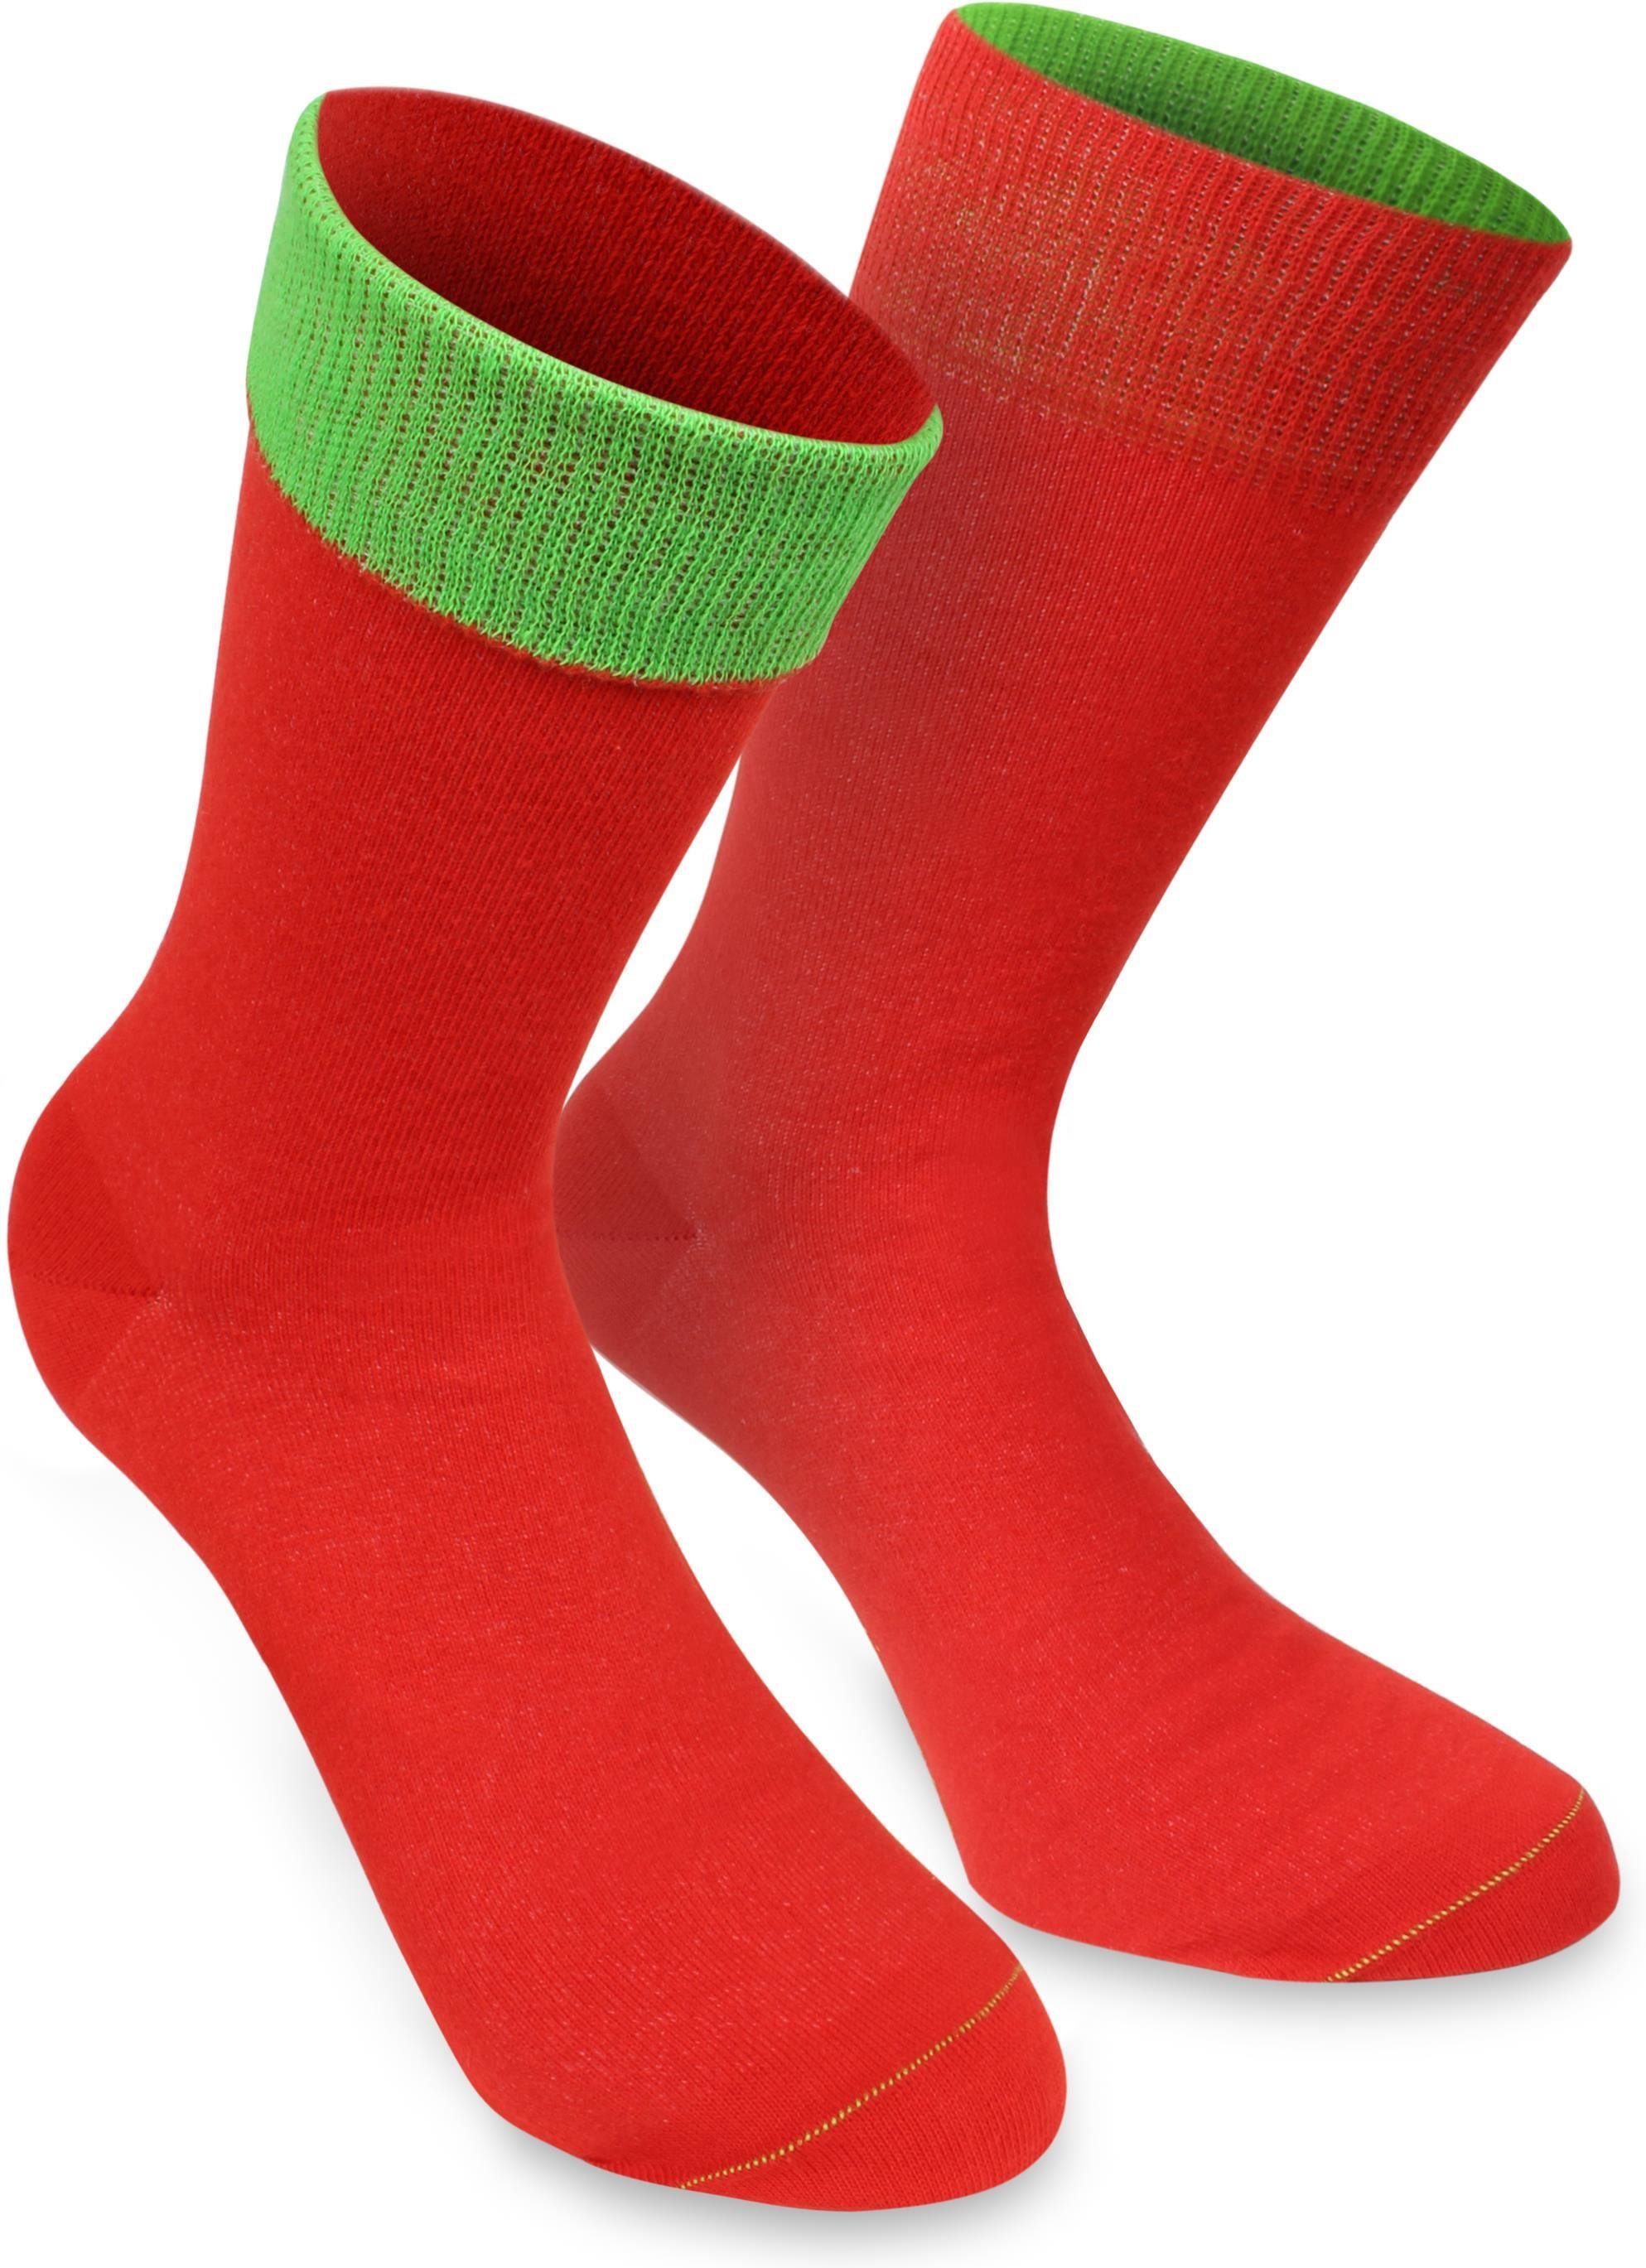 Paar) Bund normani 1 Paar Bi-Color abgesetzter Basicsocken farbig (1 Socken Rot/Apfelgrün